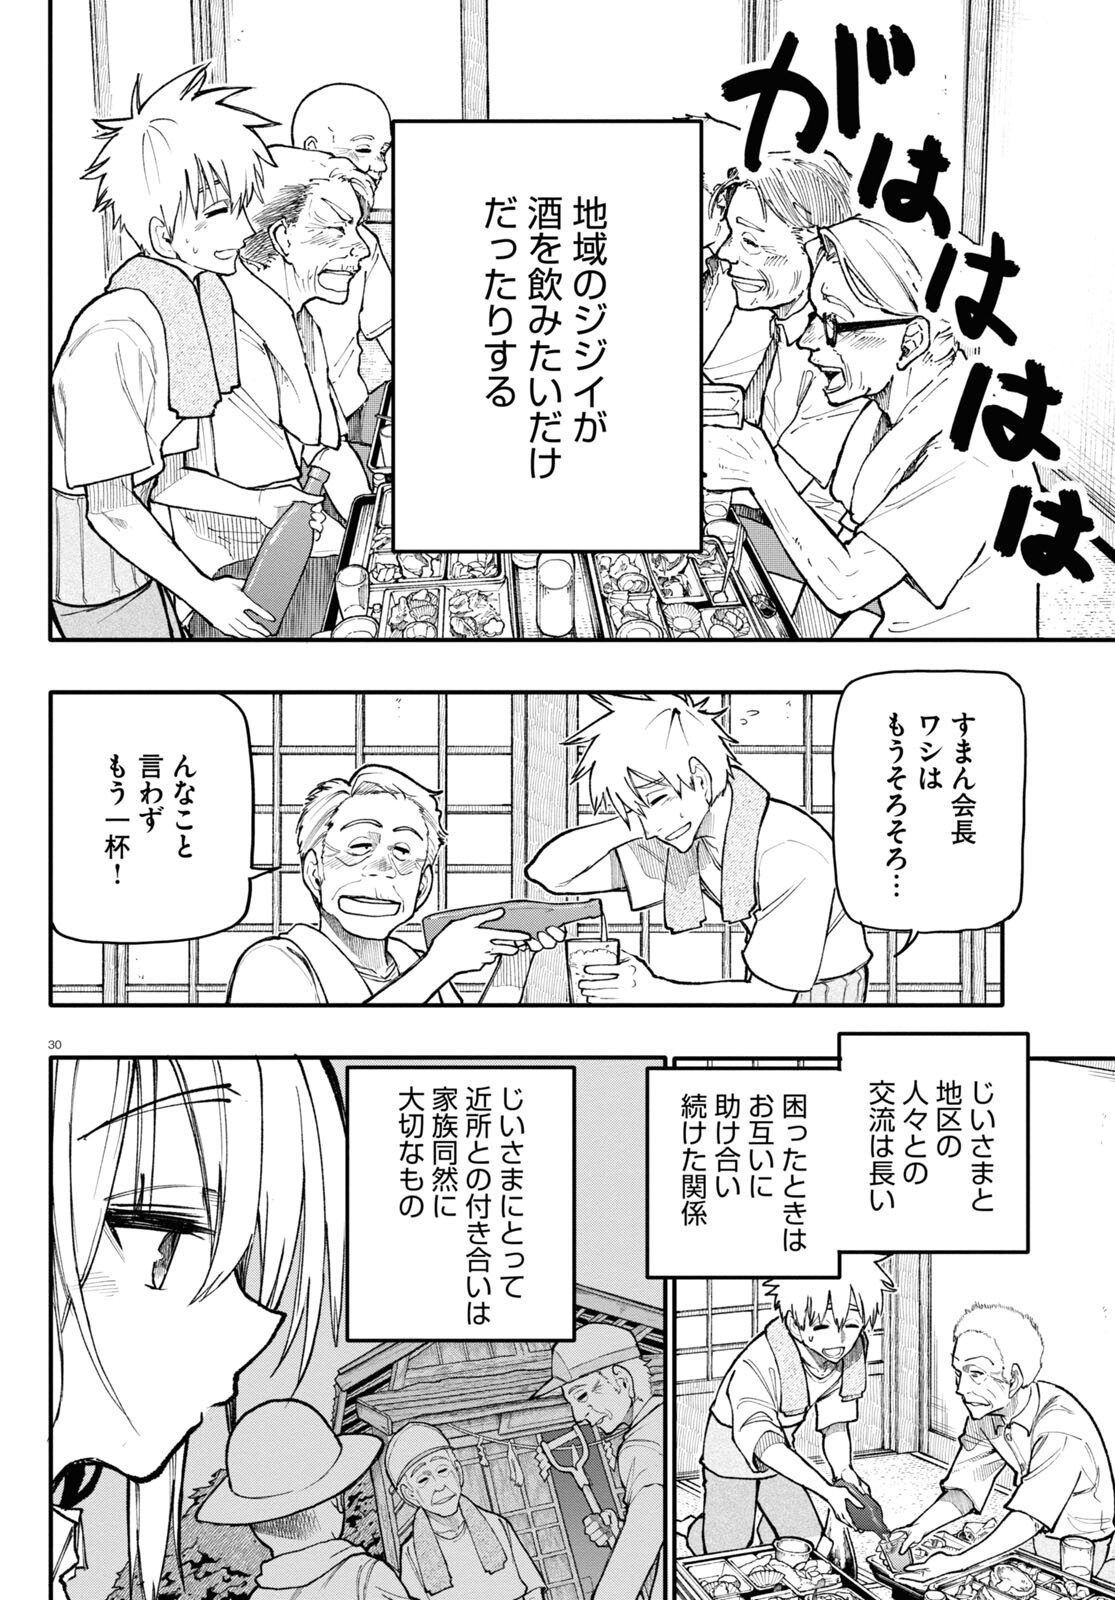 Ojii-san to Obaa-san ga Wakigaetta Hanashi - Chapter 143 - Page 2